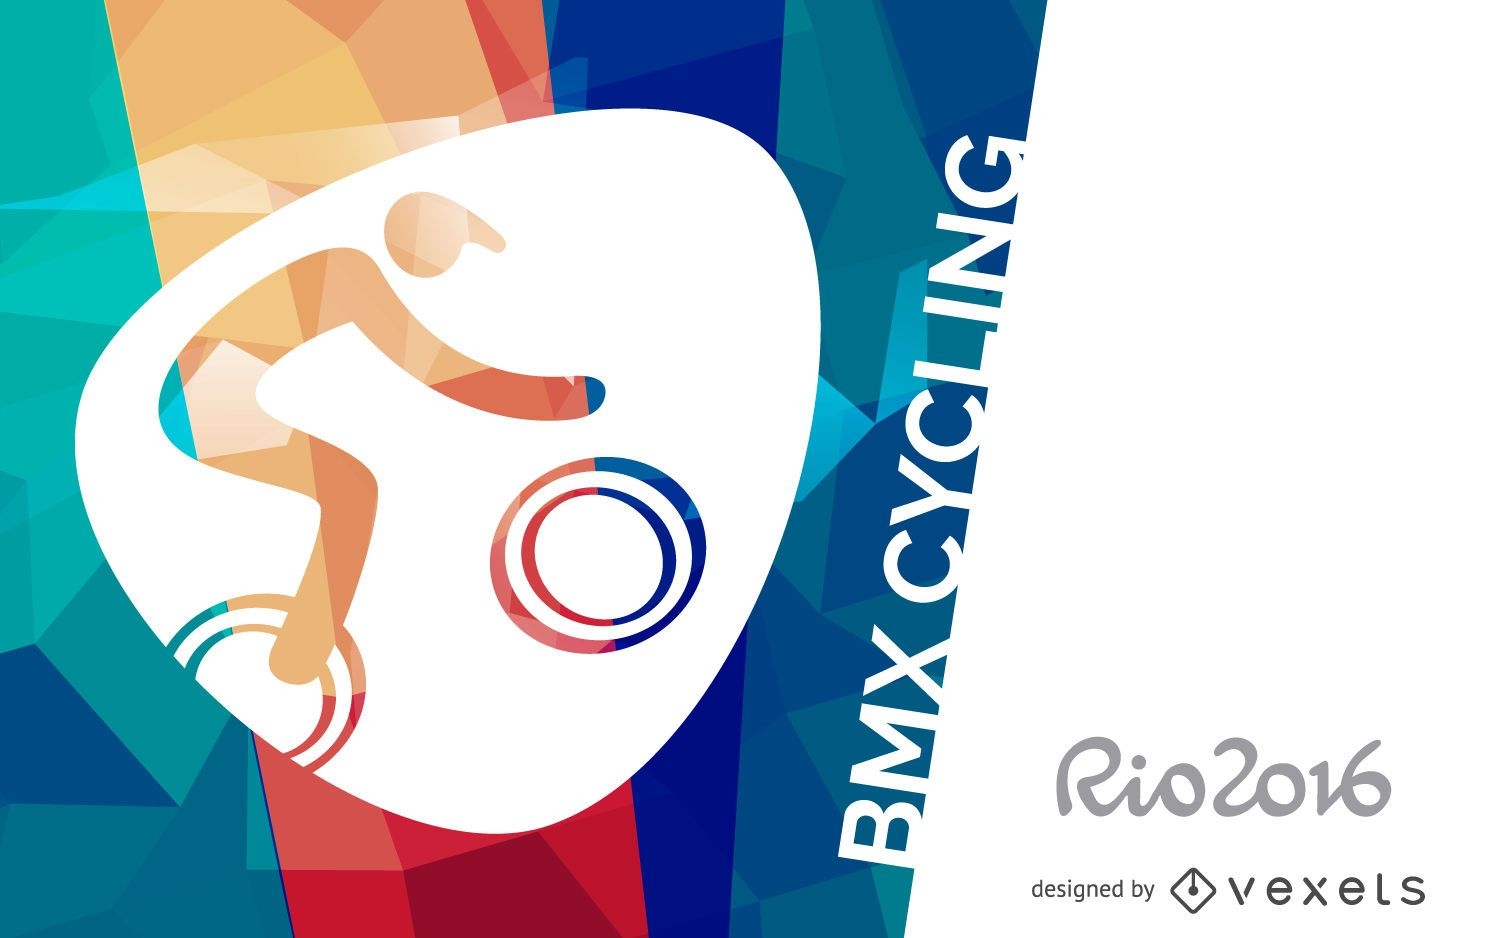 Rio 2016 BMX cycling poster